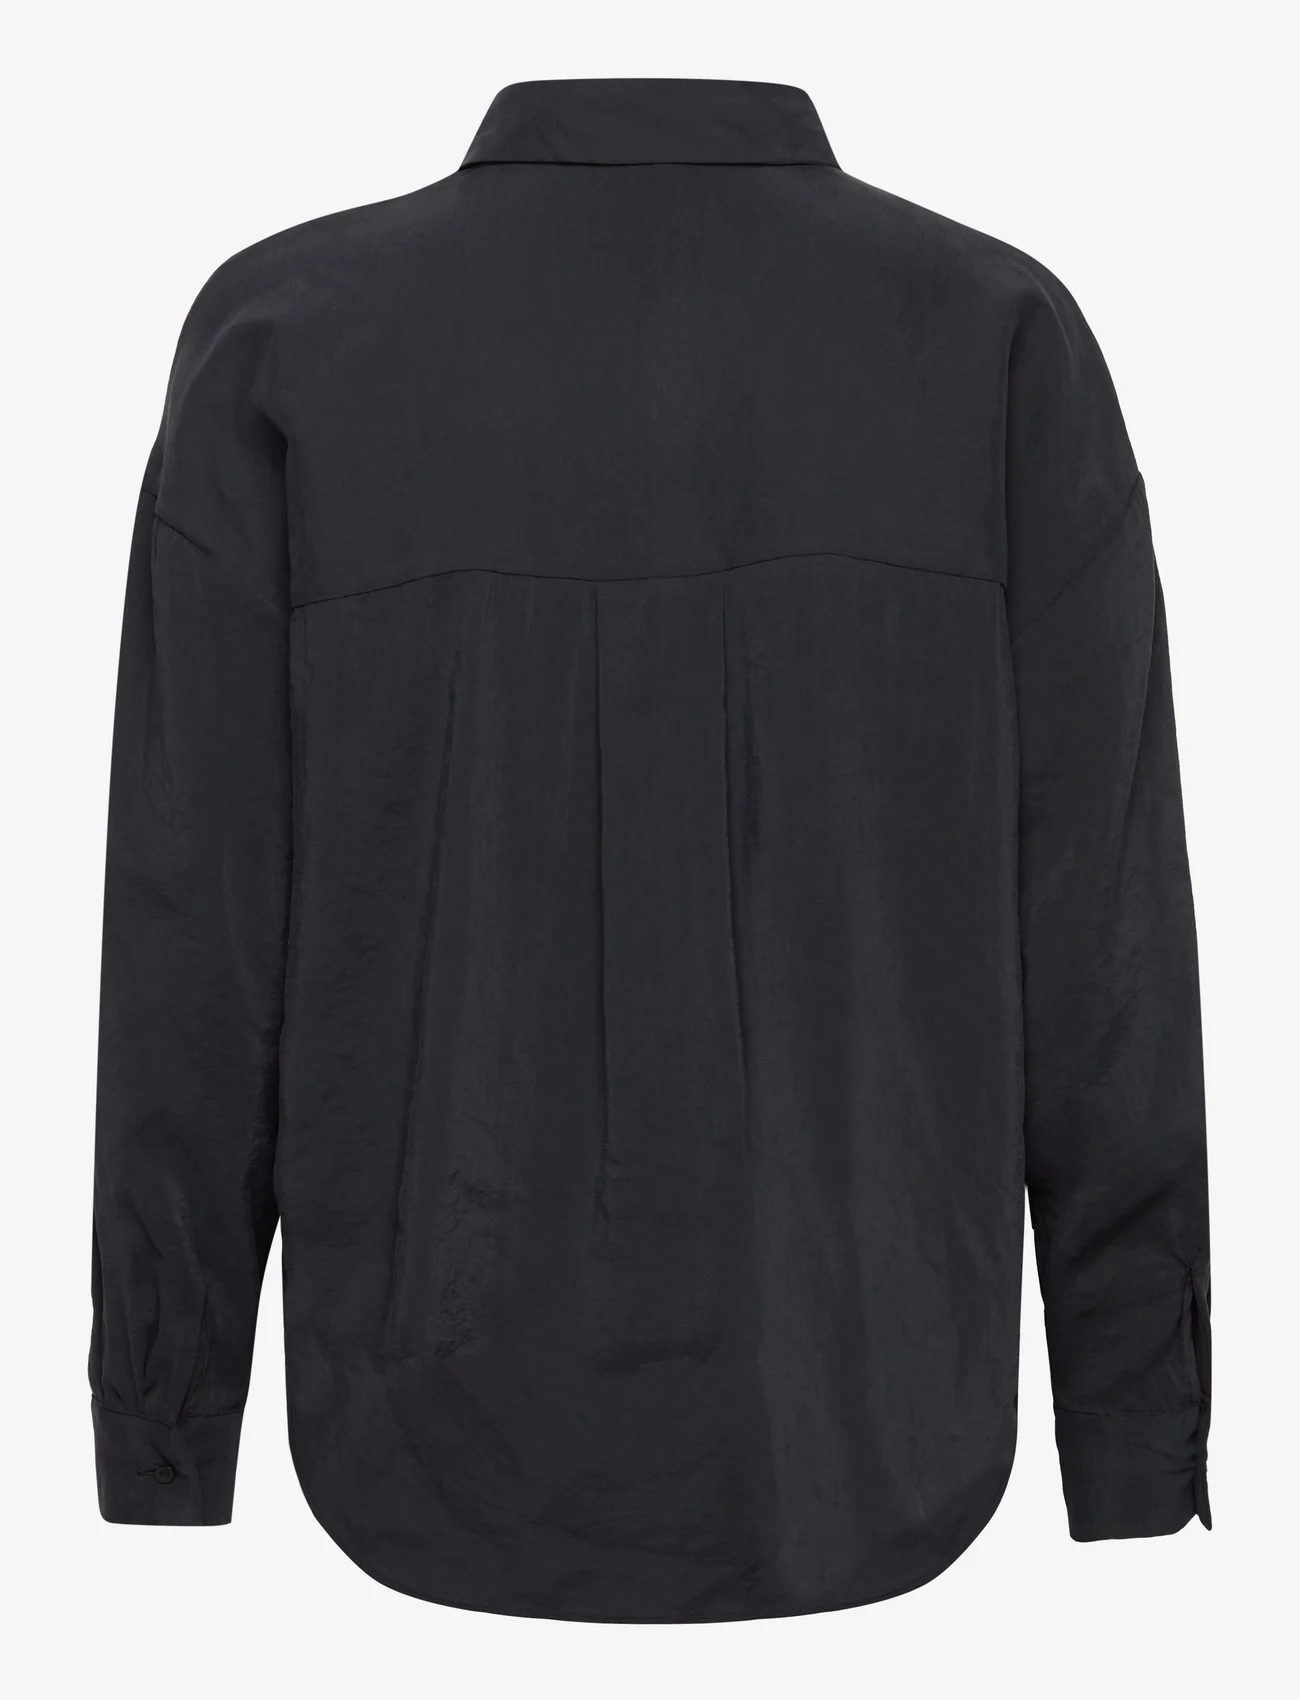 ONLY - ONLIRIS L/S MODAL SHIRT  WVN - pitkähihaiset paidat - black - 1